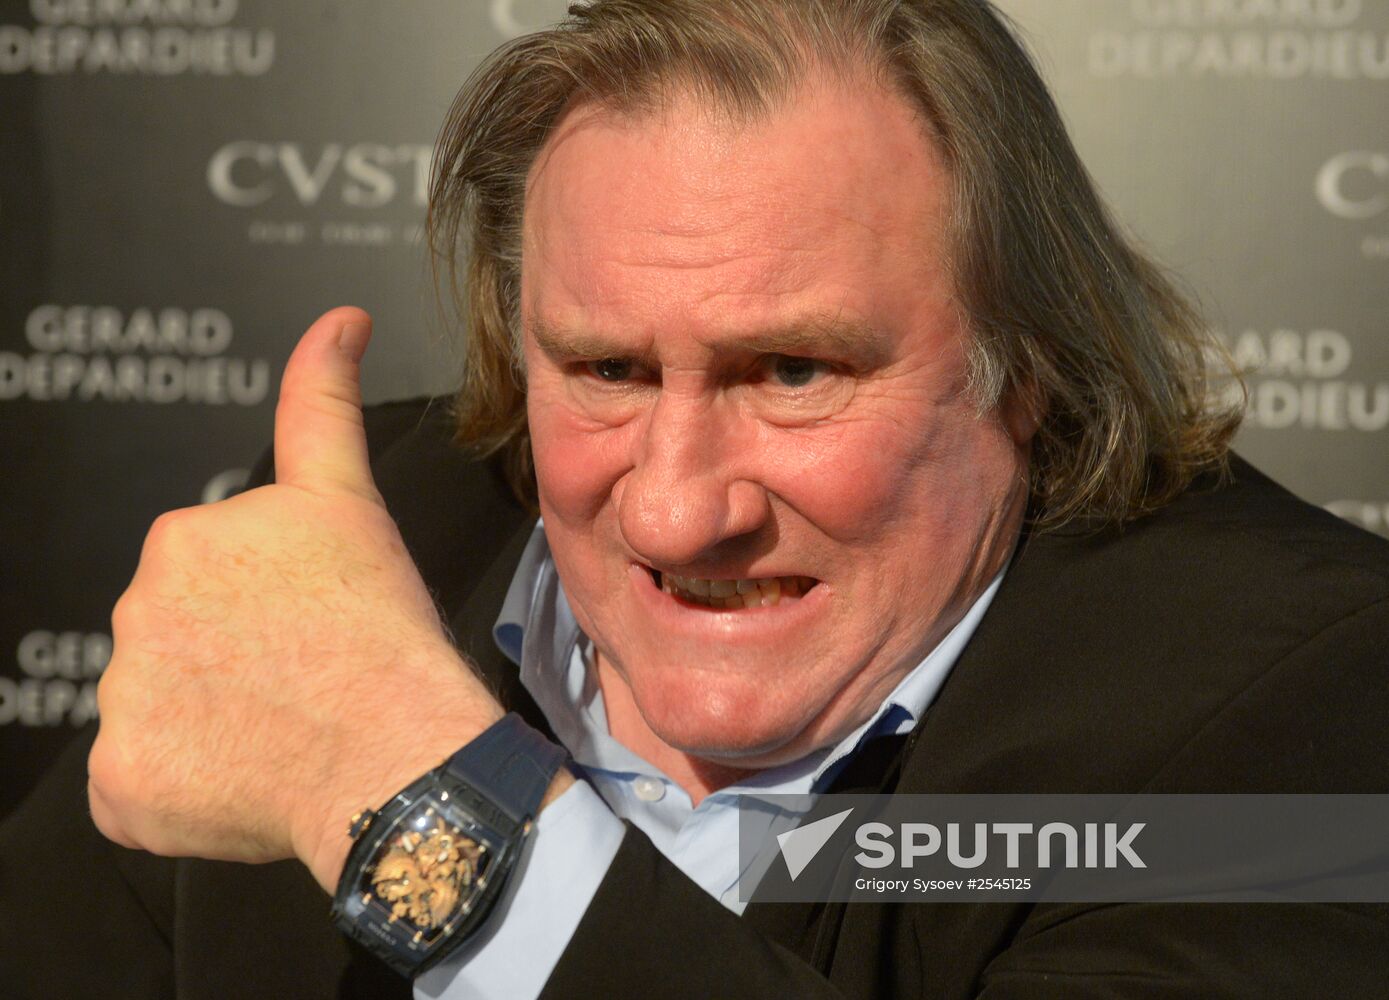 Cvstos and Gerard Depardieu present watch line "Proud to be Russian"